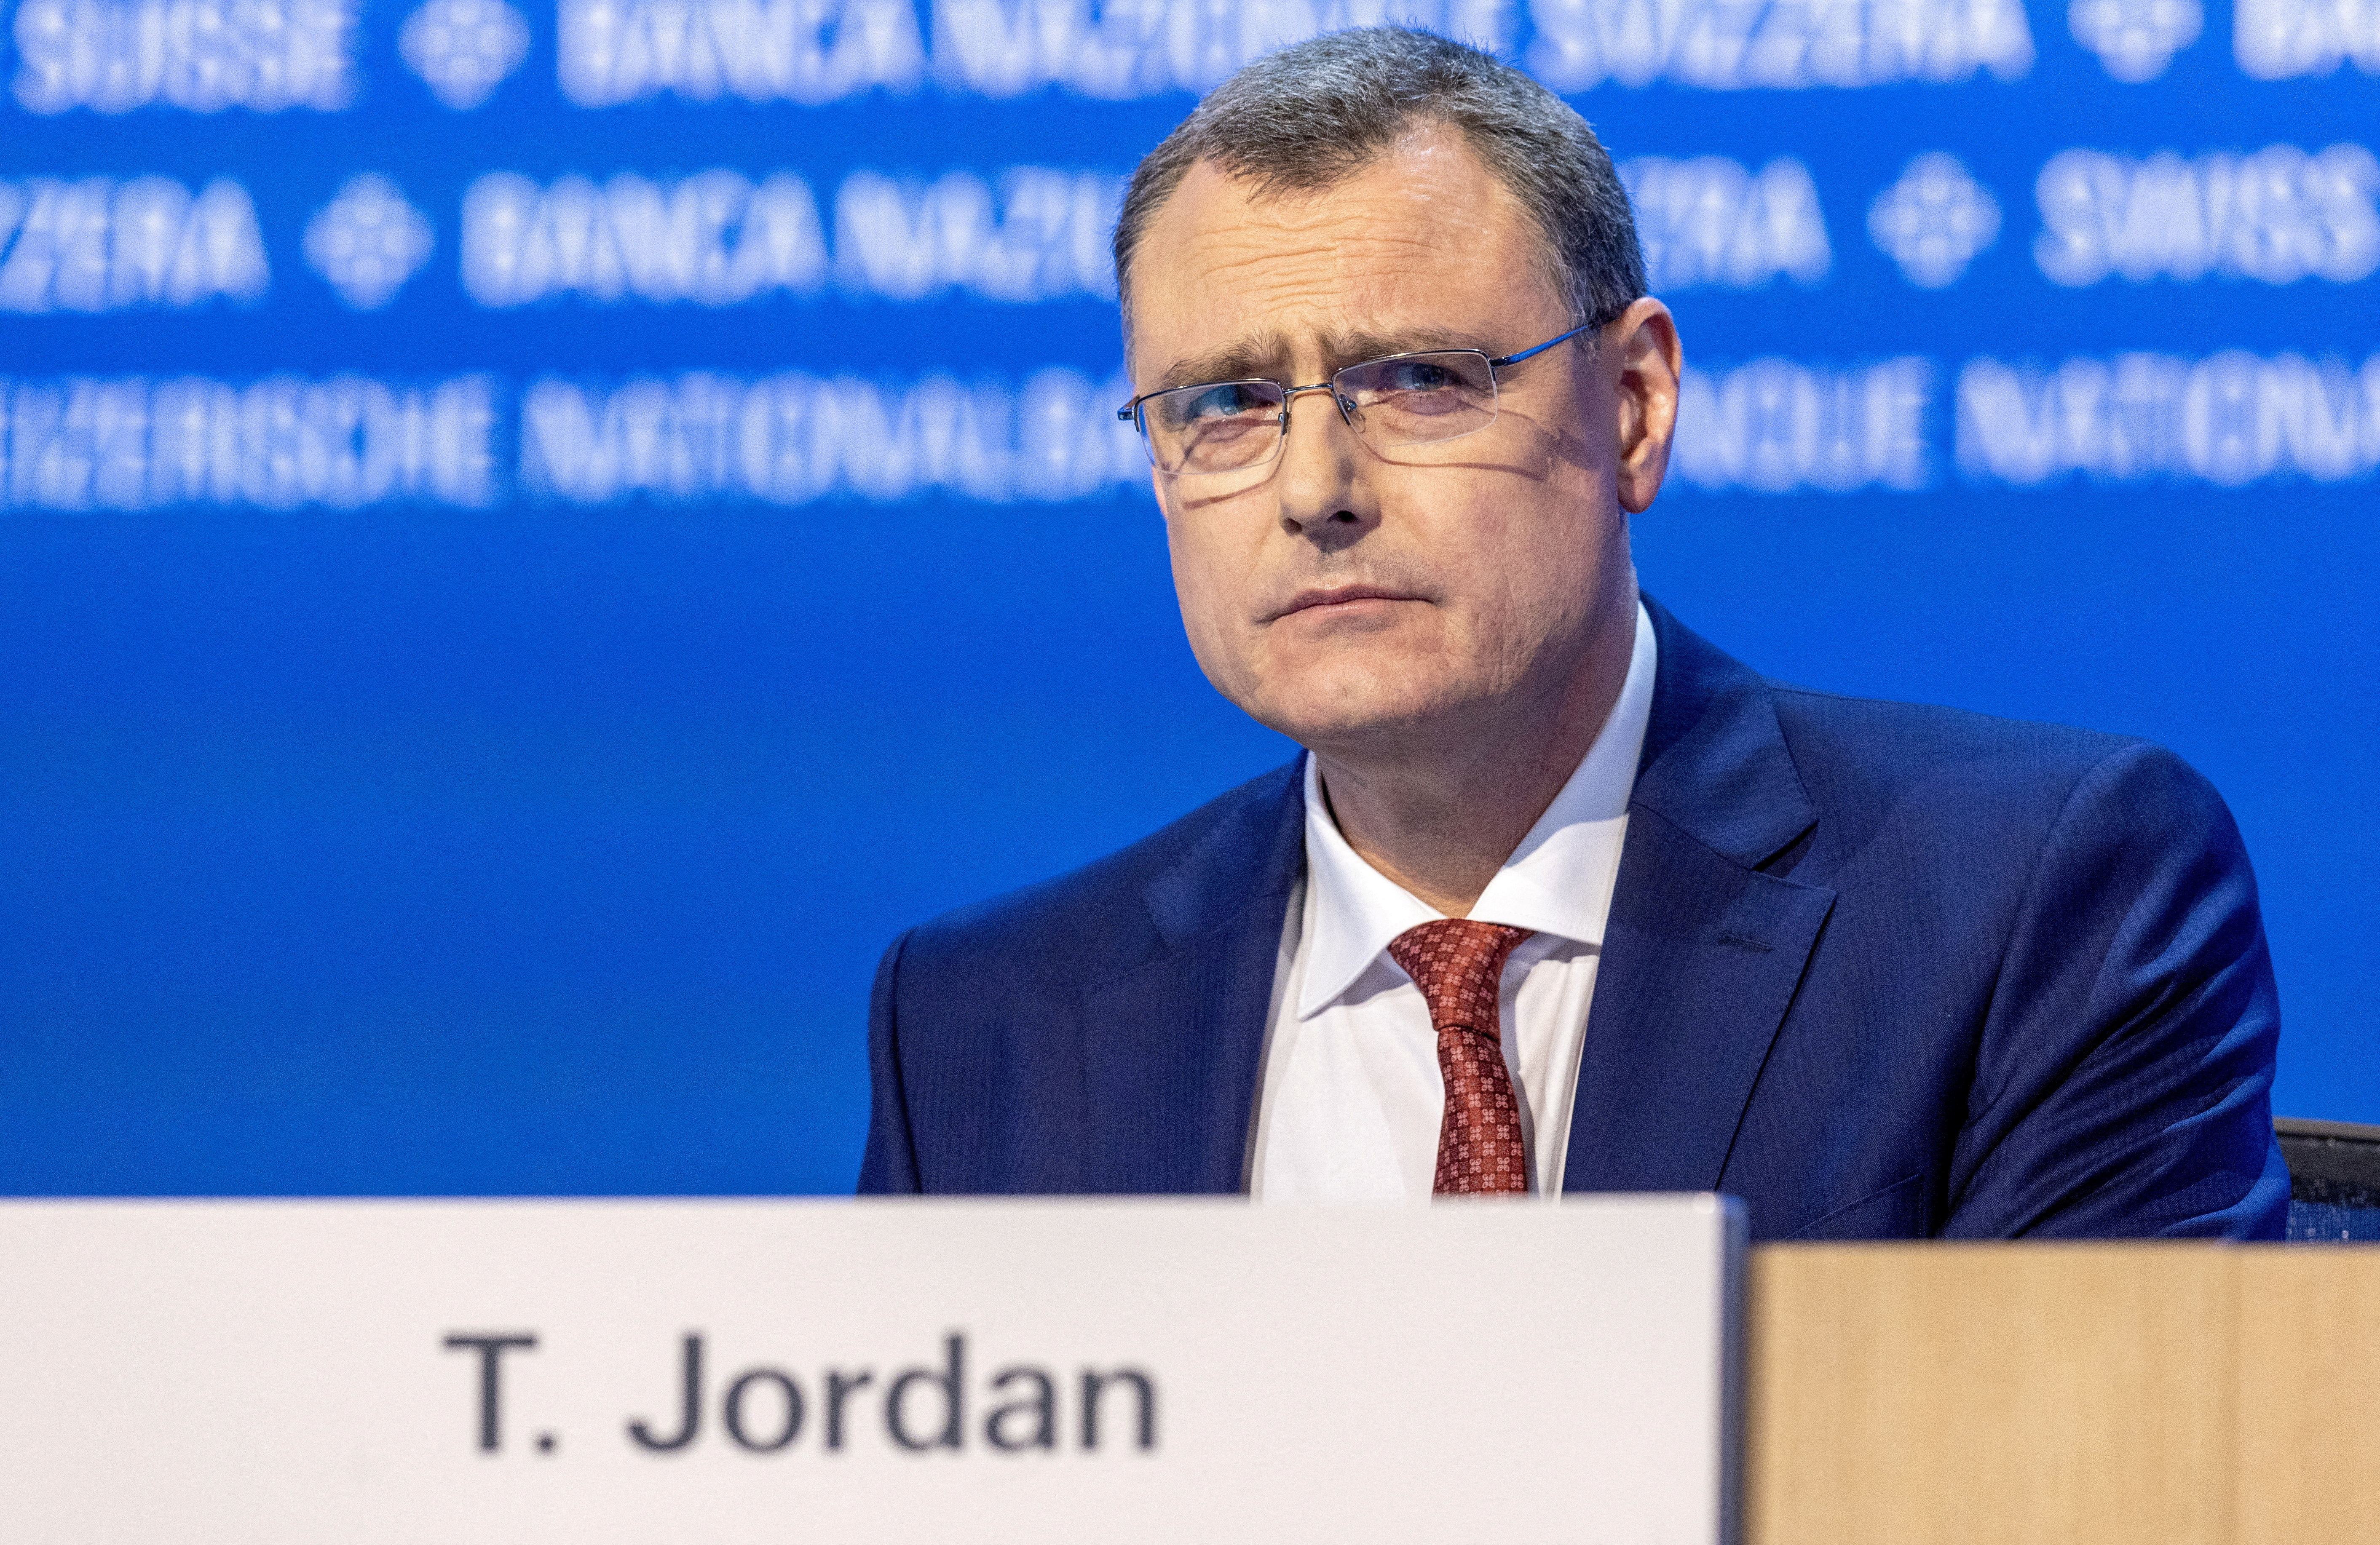 Swiss National Bank Chairman Jordan at shareholders meeting in Bern